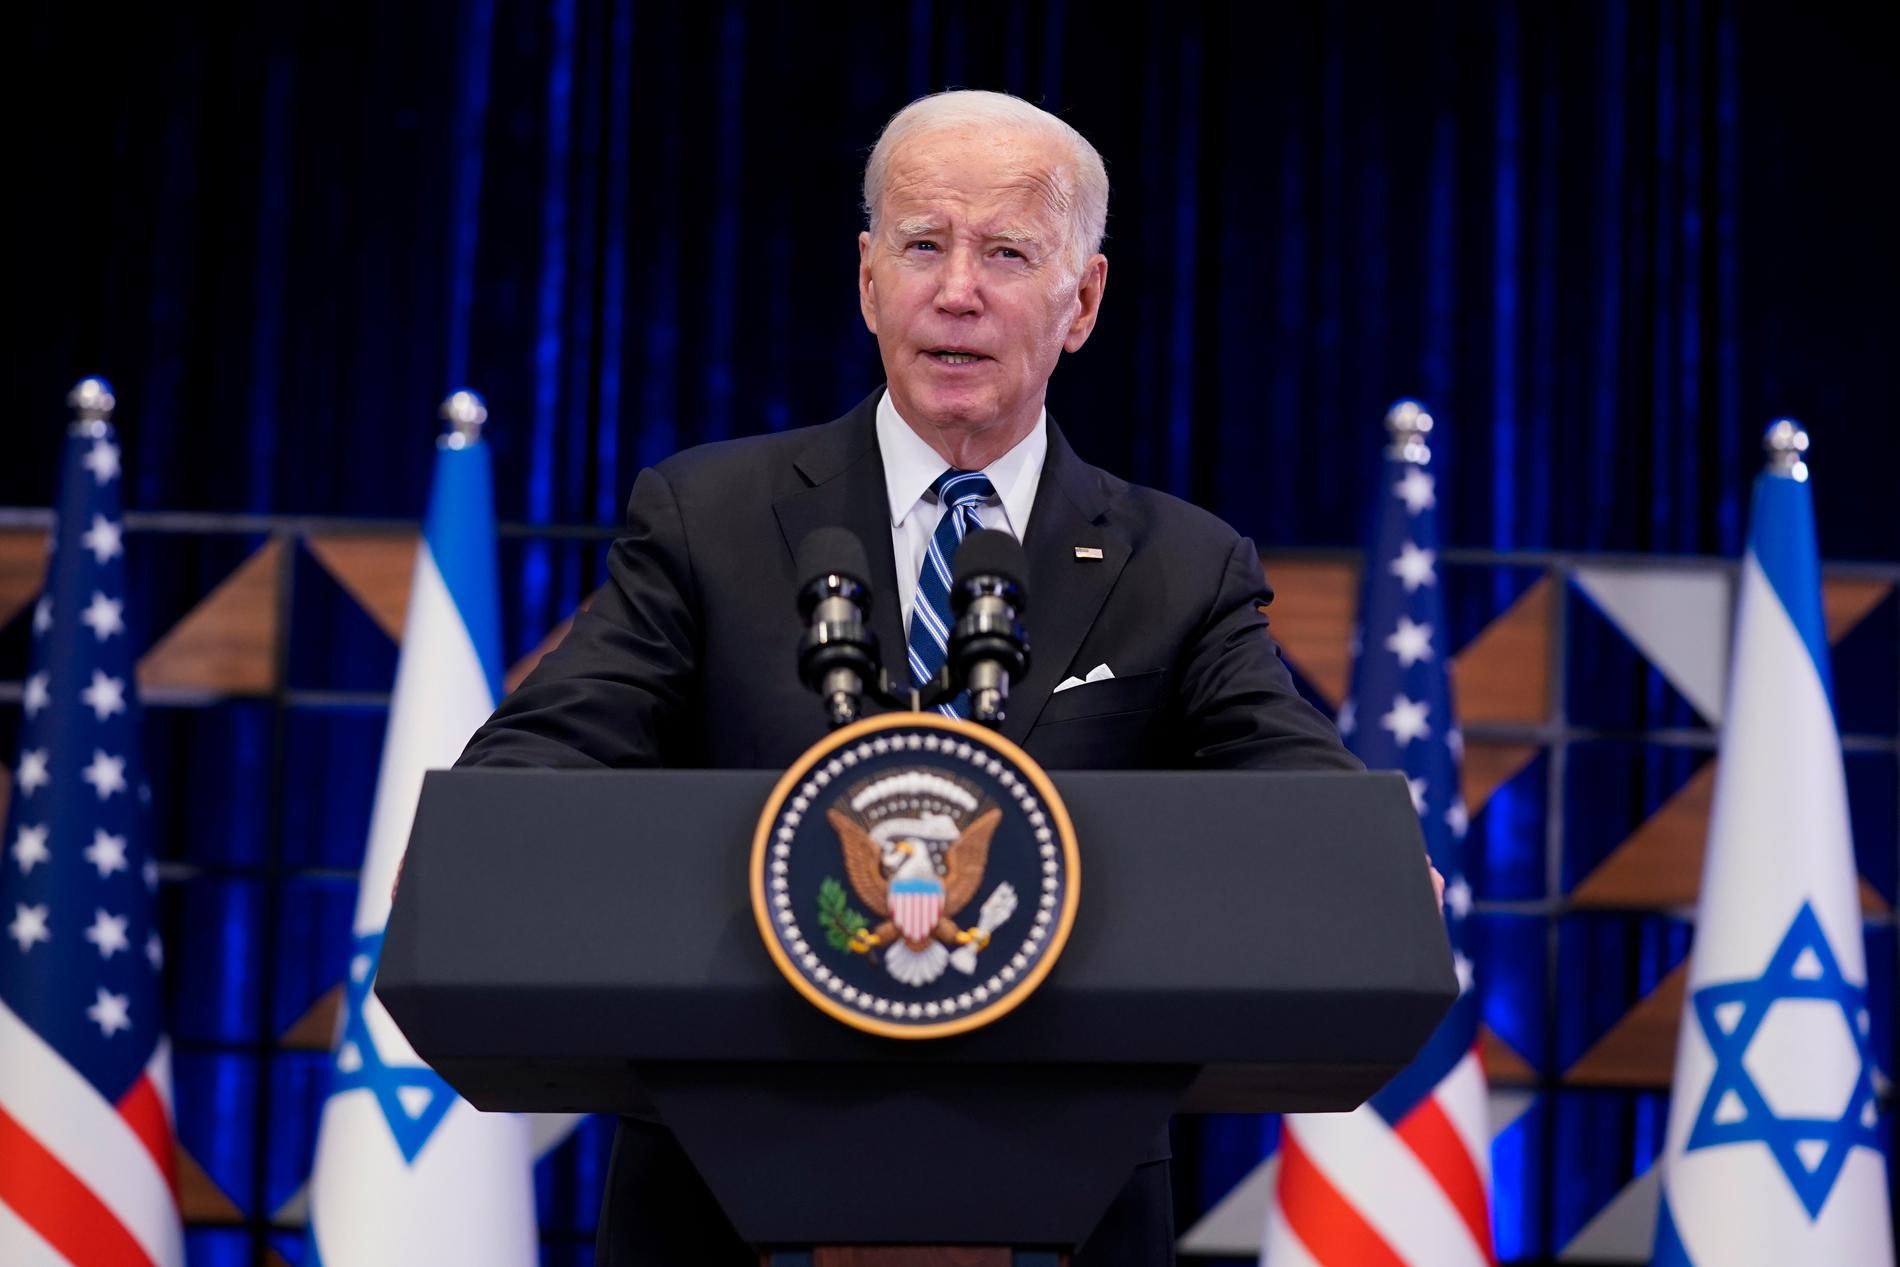 TEL AVIV: Joe Biden from the podium in Tel Aviv. 